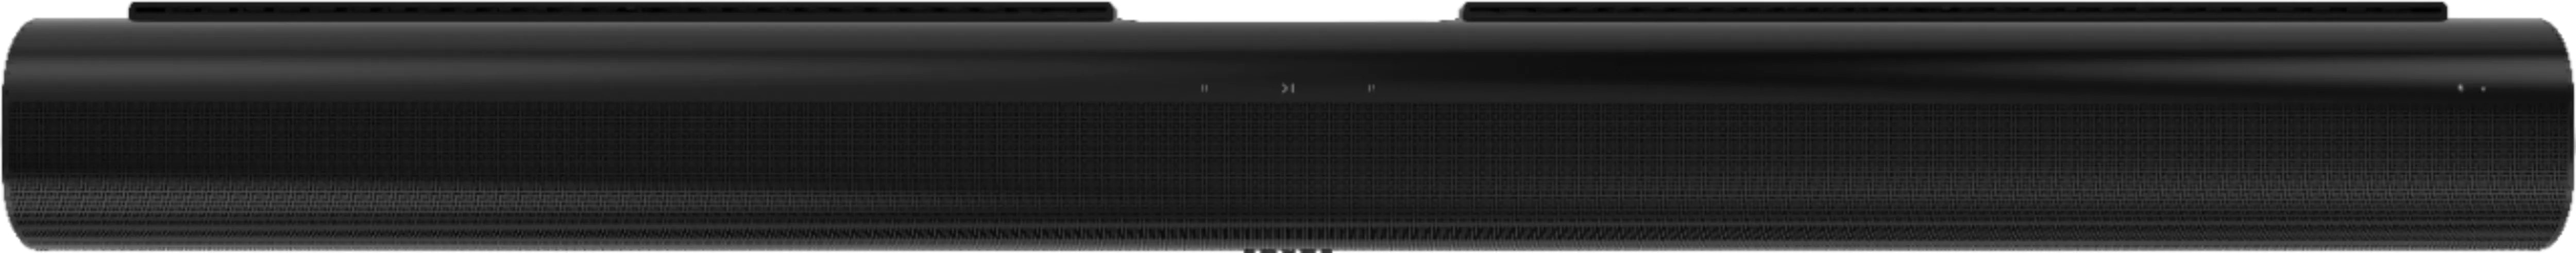 Sonos Arc Soundbar Dolby Atmos Google Assistant and Amazon Alexa (Black) - Refurbished